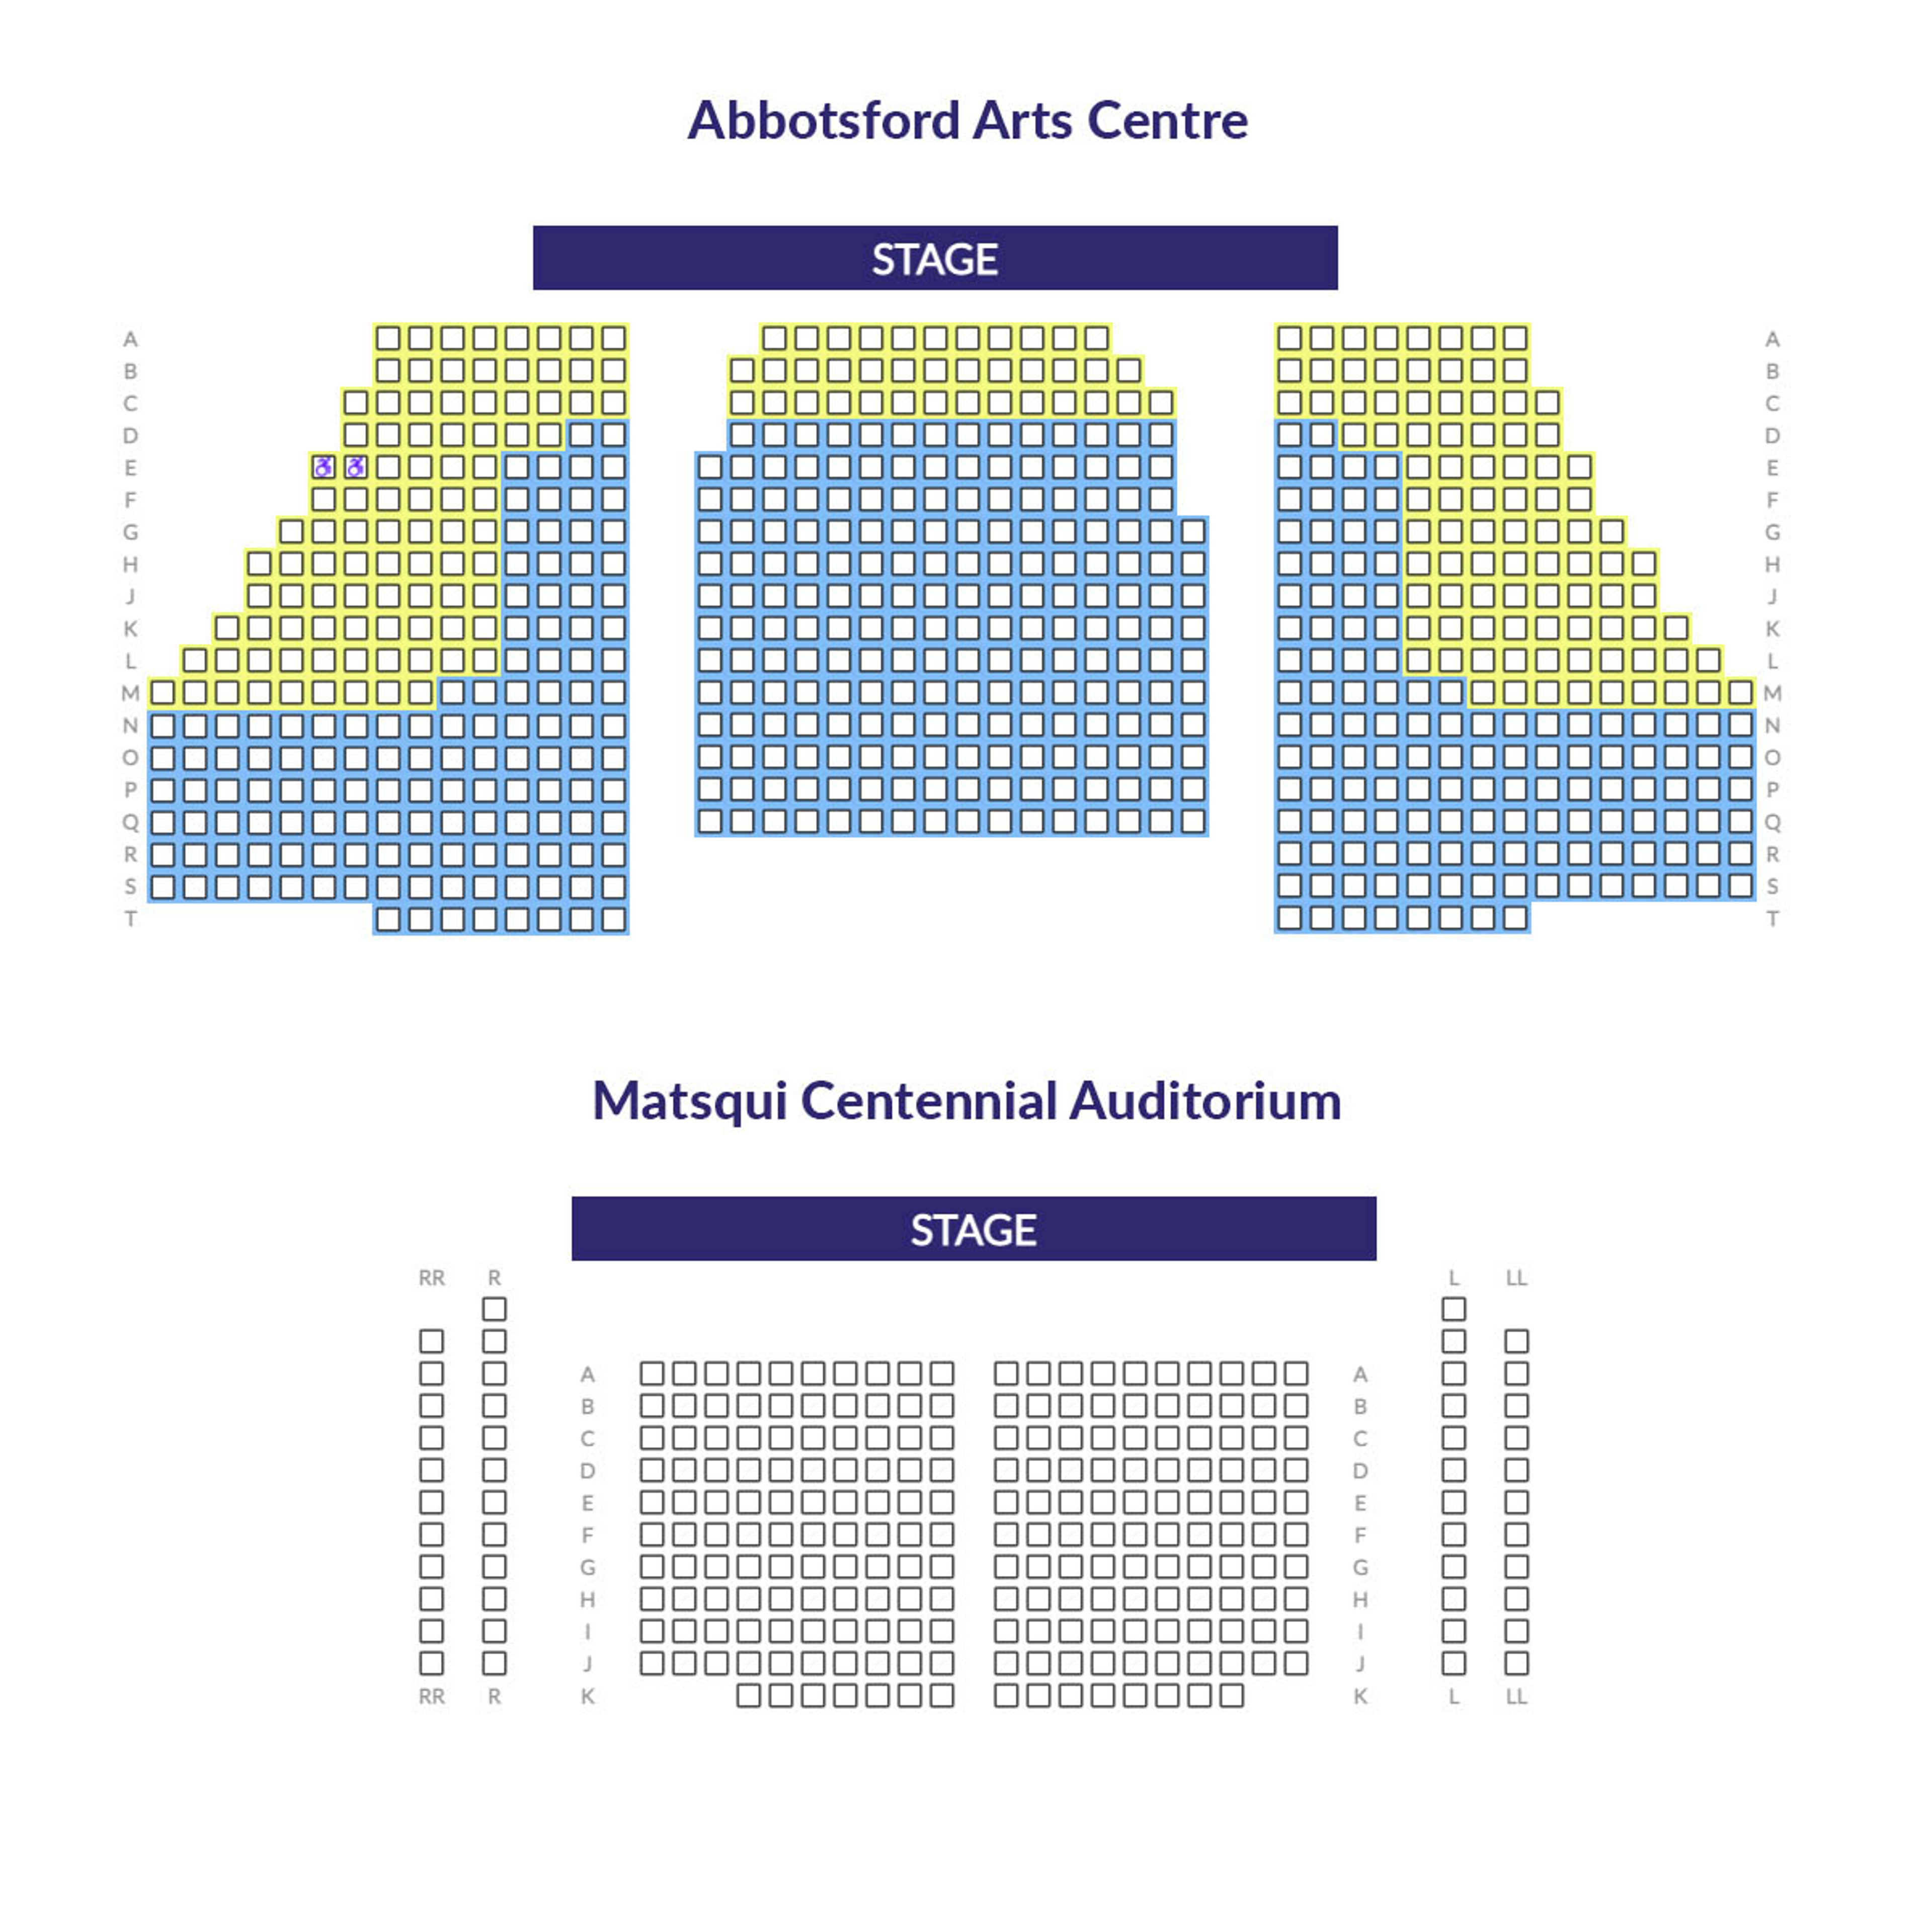 Seating maps for Abbotsford Arts Centre and Matsqui Centennial Auditorium